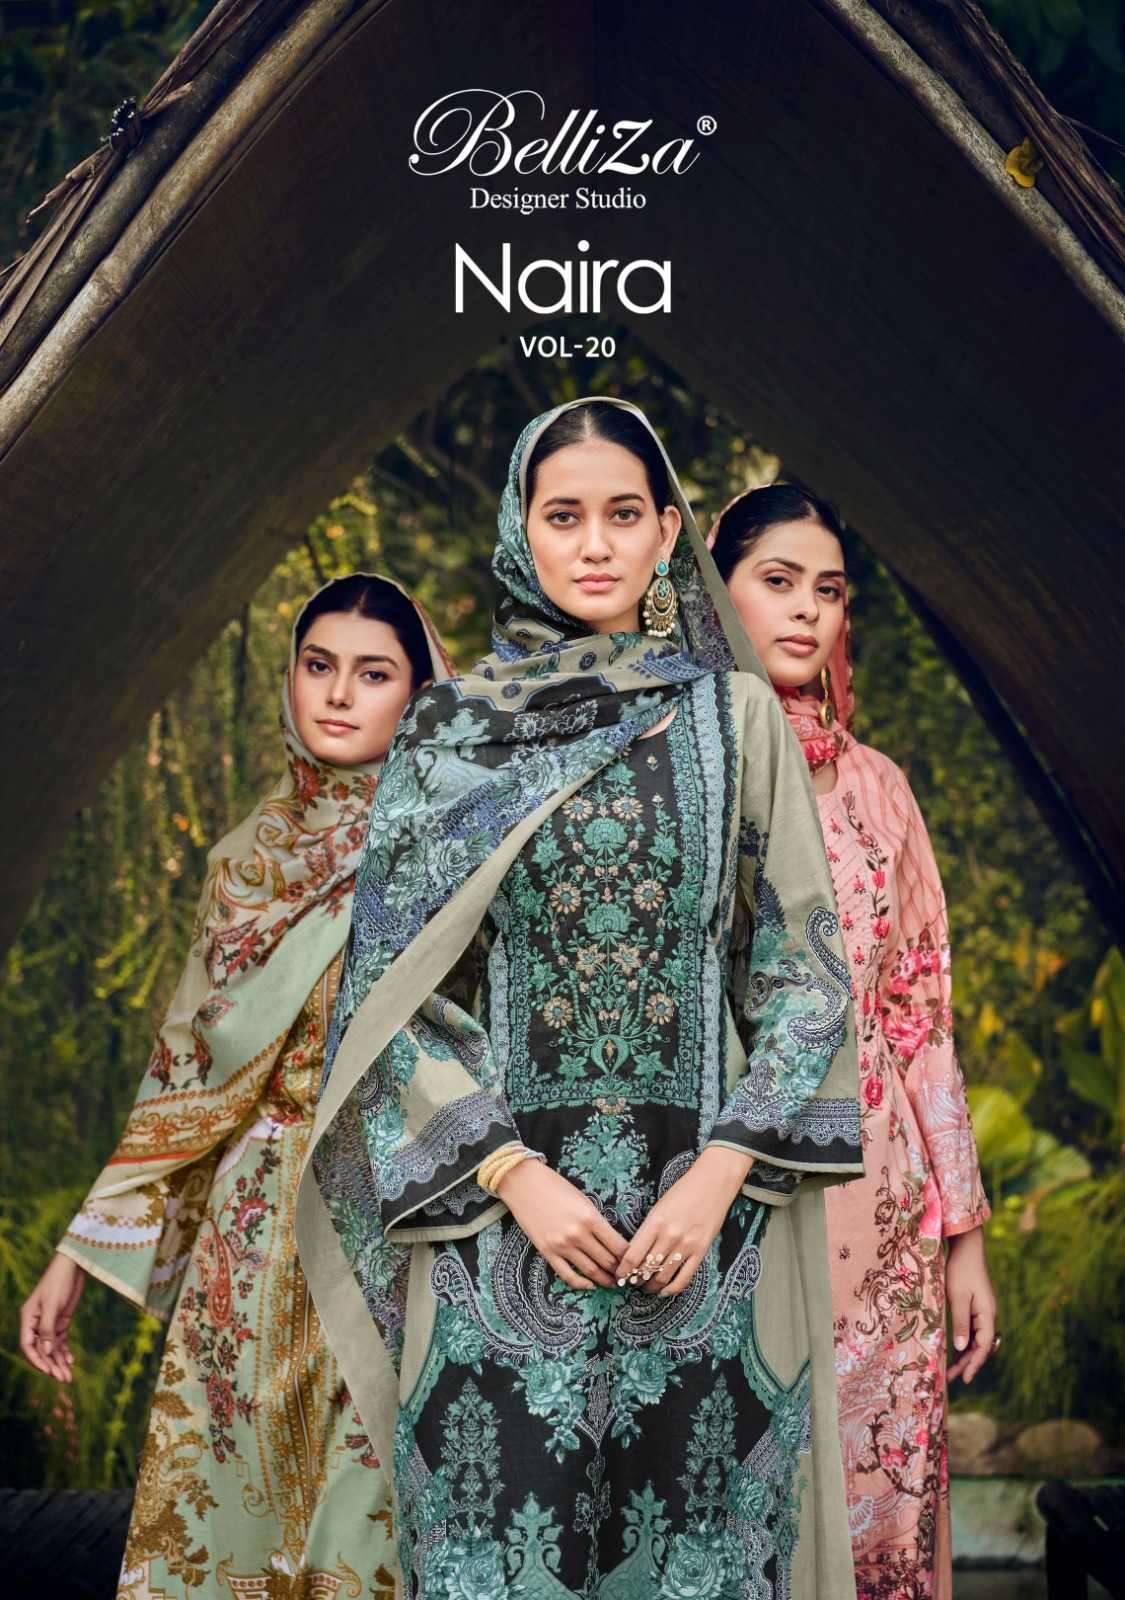 belliza naira vol 20 series 843001-843010 Pure Cotton Digital Prints suit